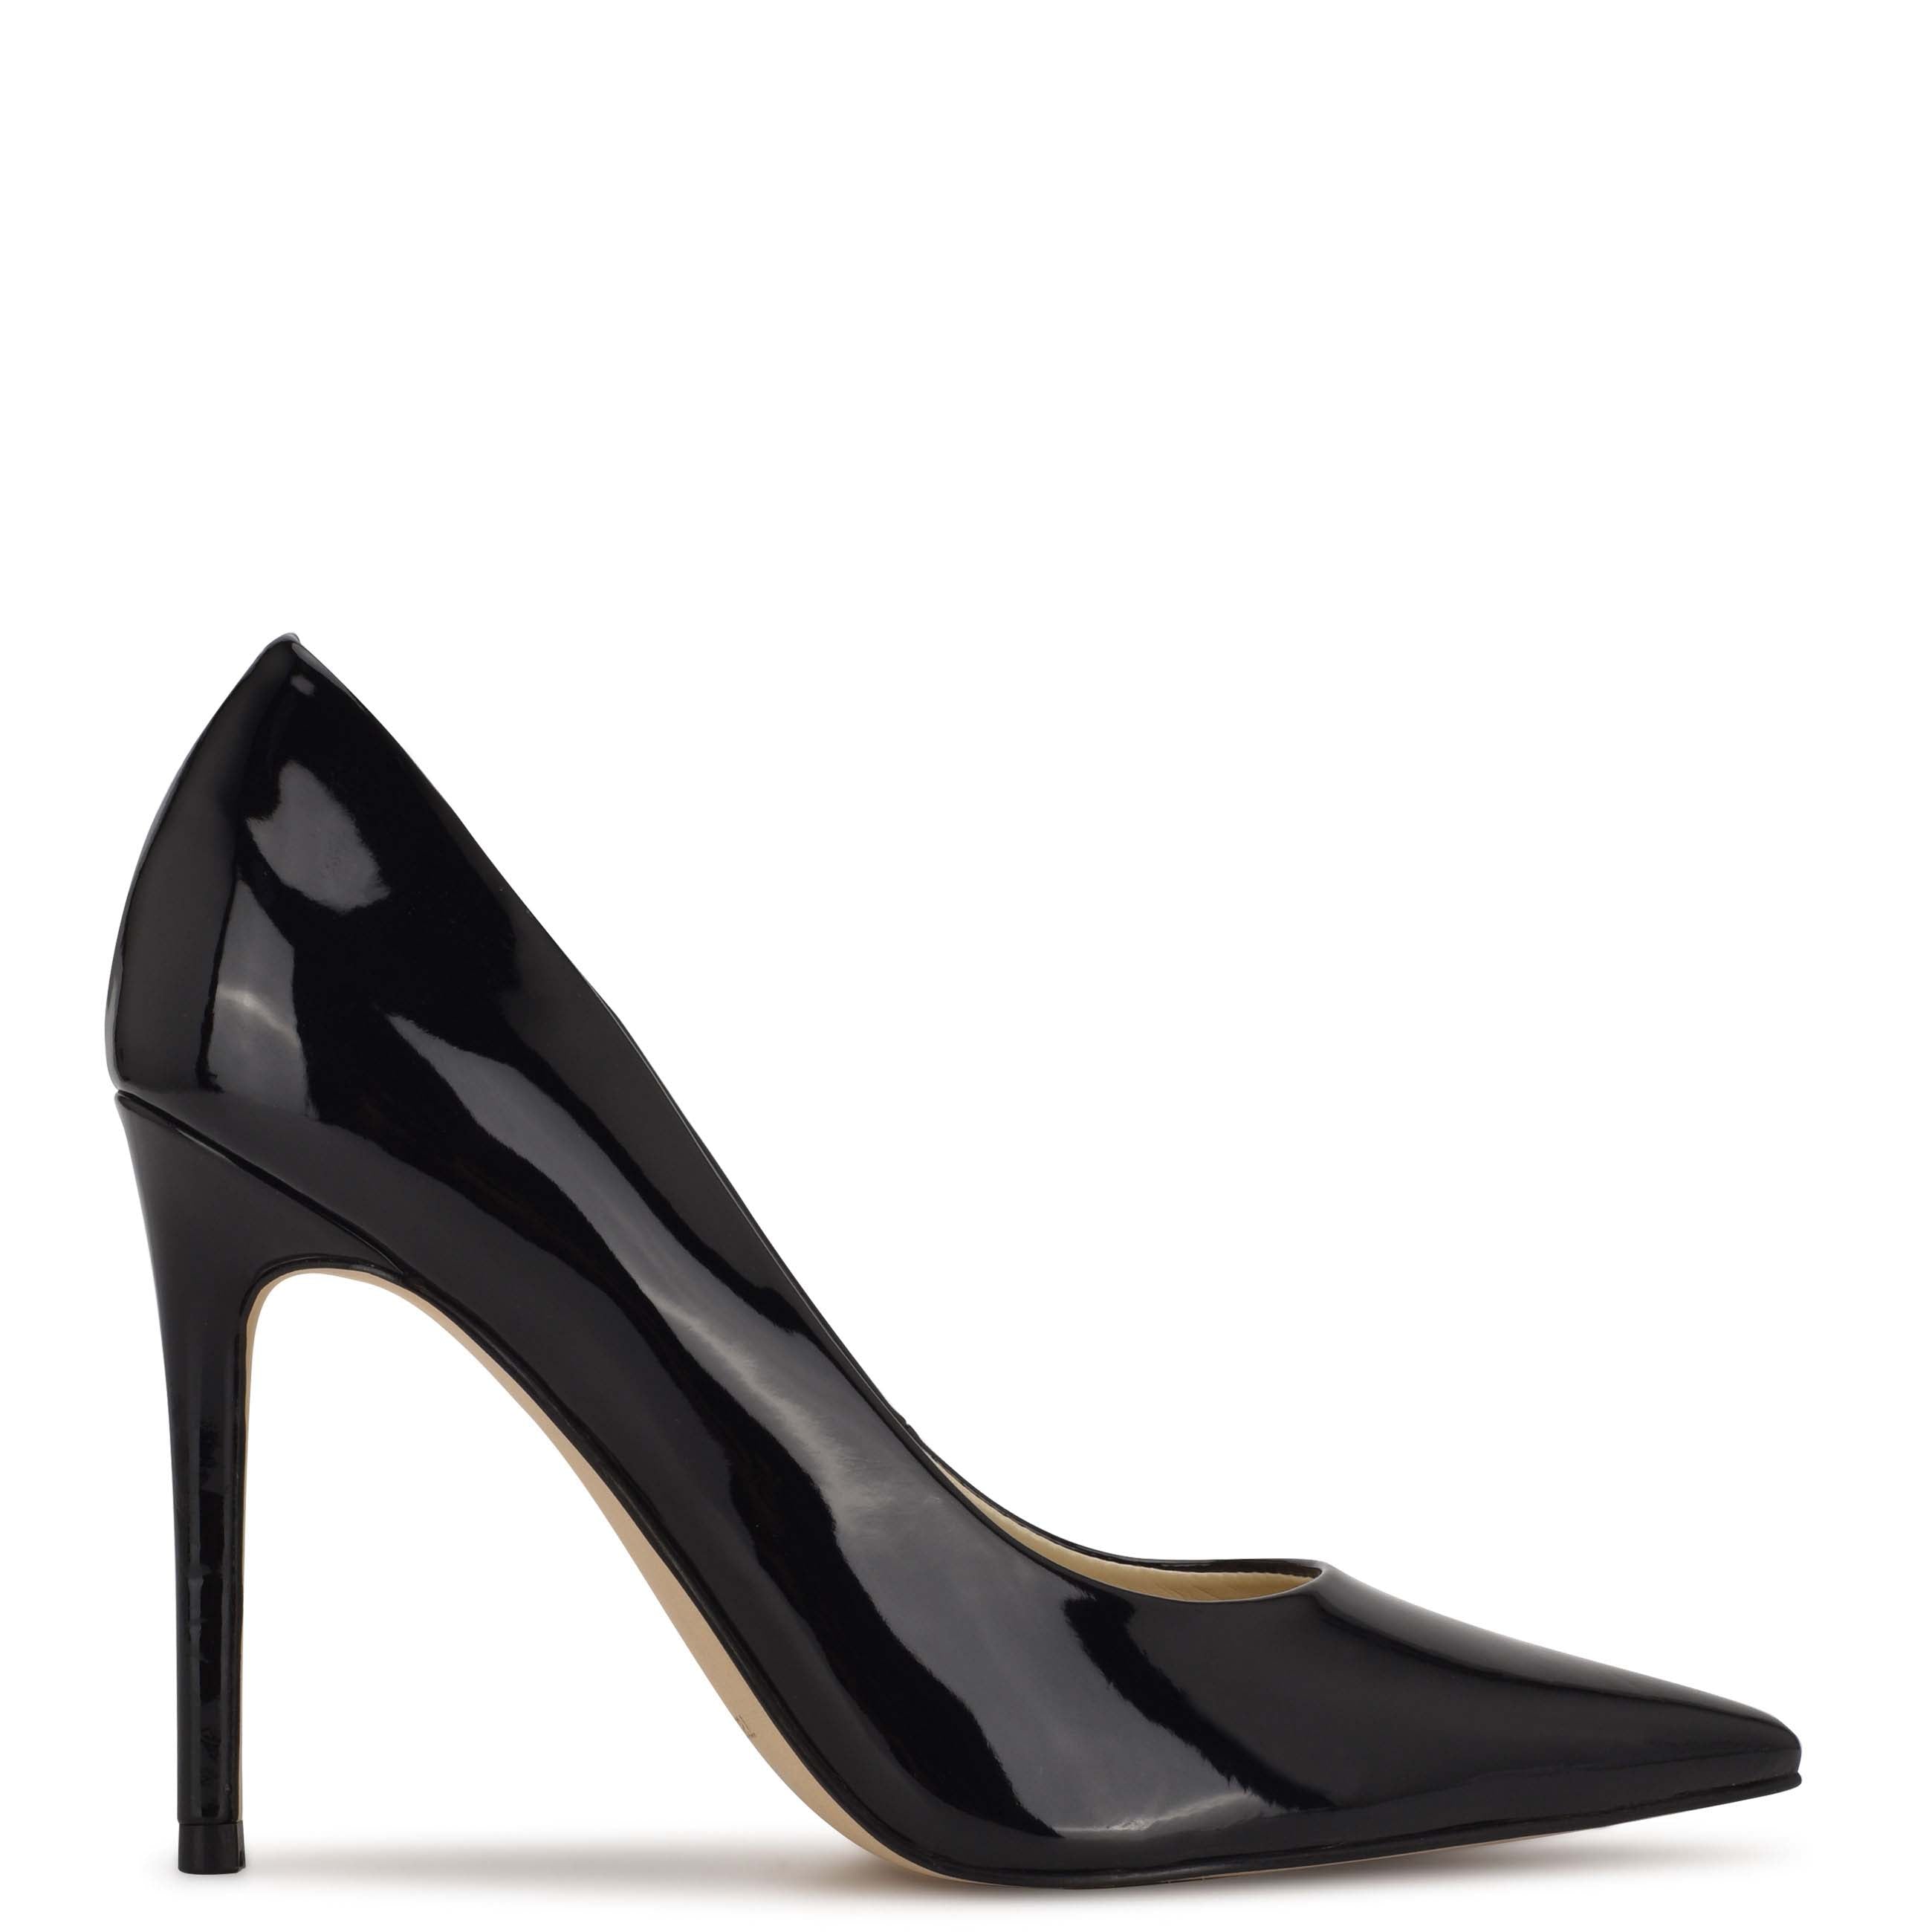 Lucy Jeweled Heel - Black | Heels, Jeweled heels, Prom shoes